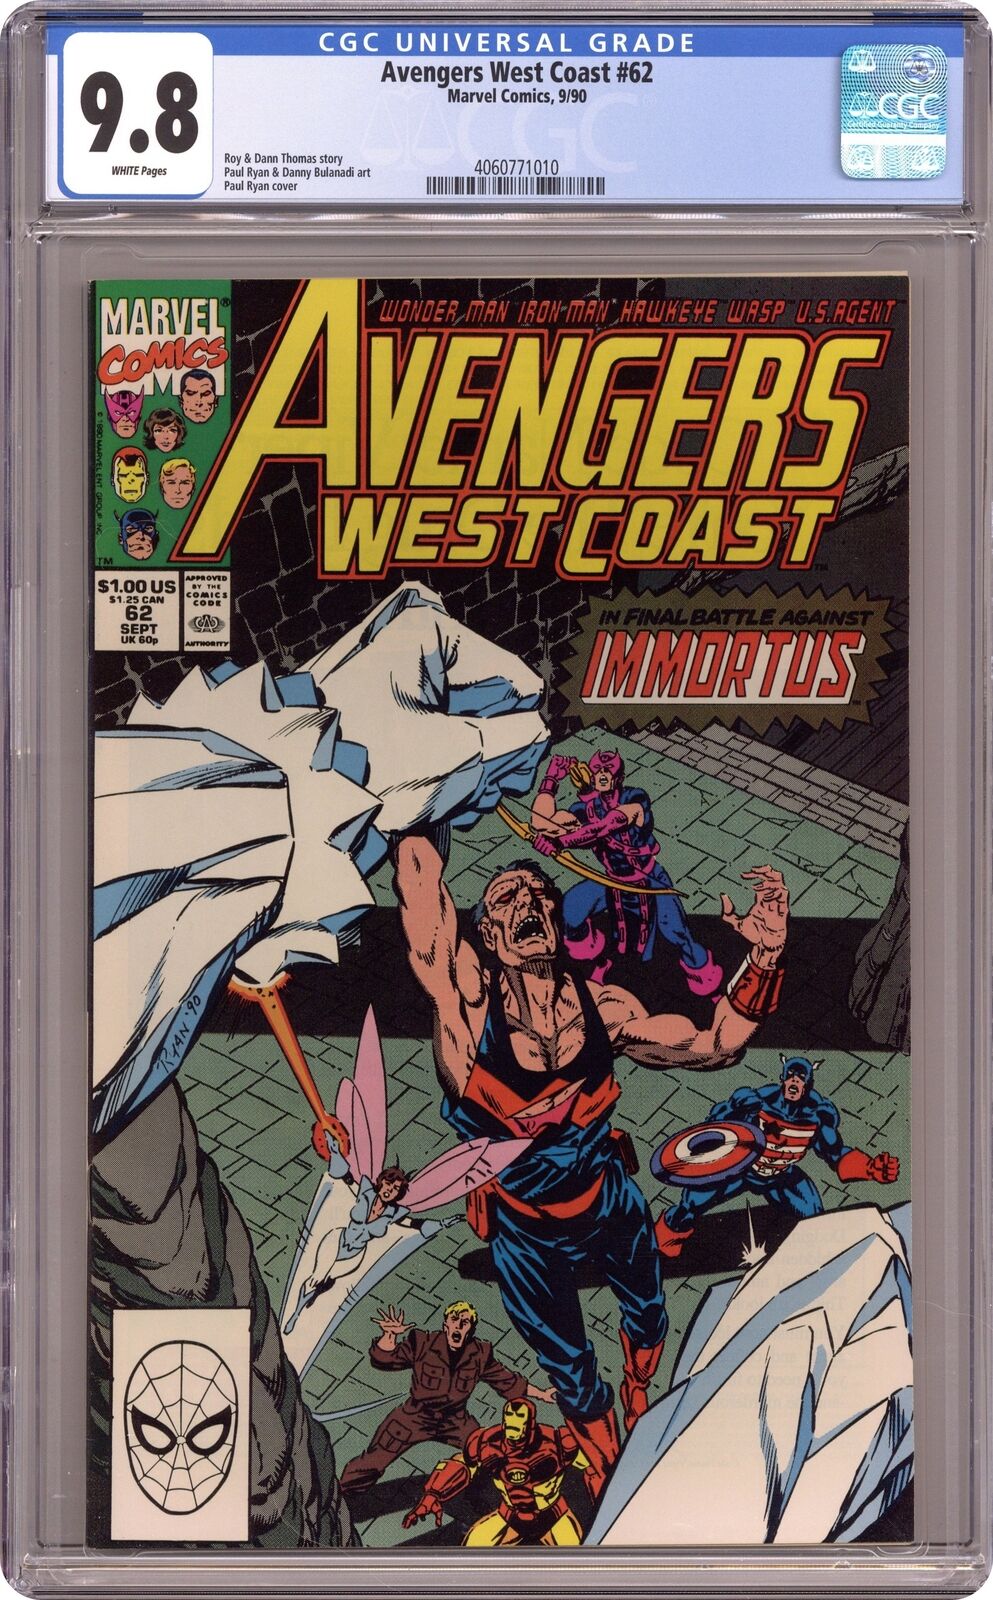 Avengers West Coast #62 CGC 9.8 1990 4060771010